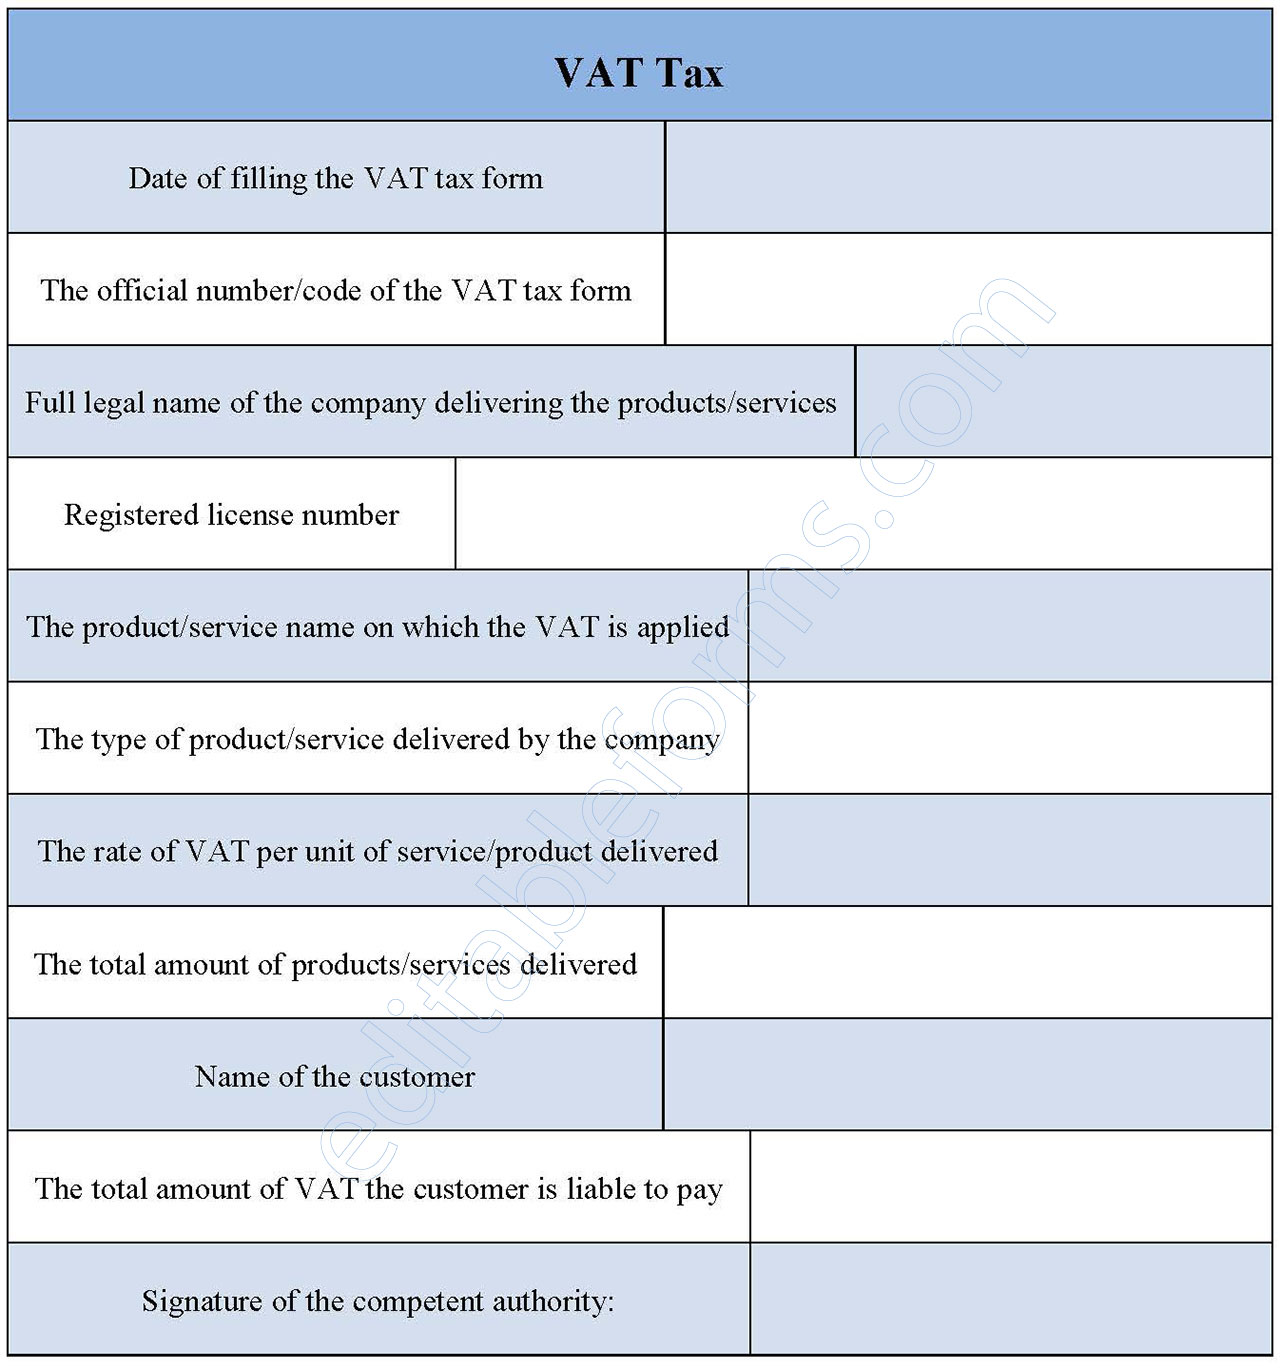 VAT Tax Form